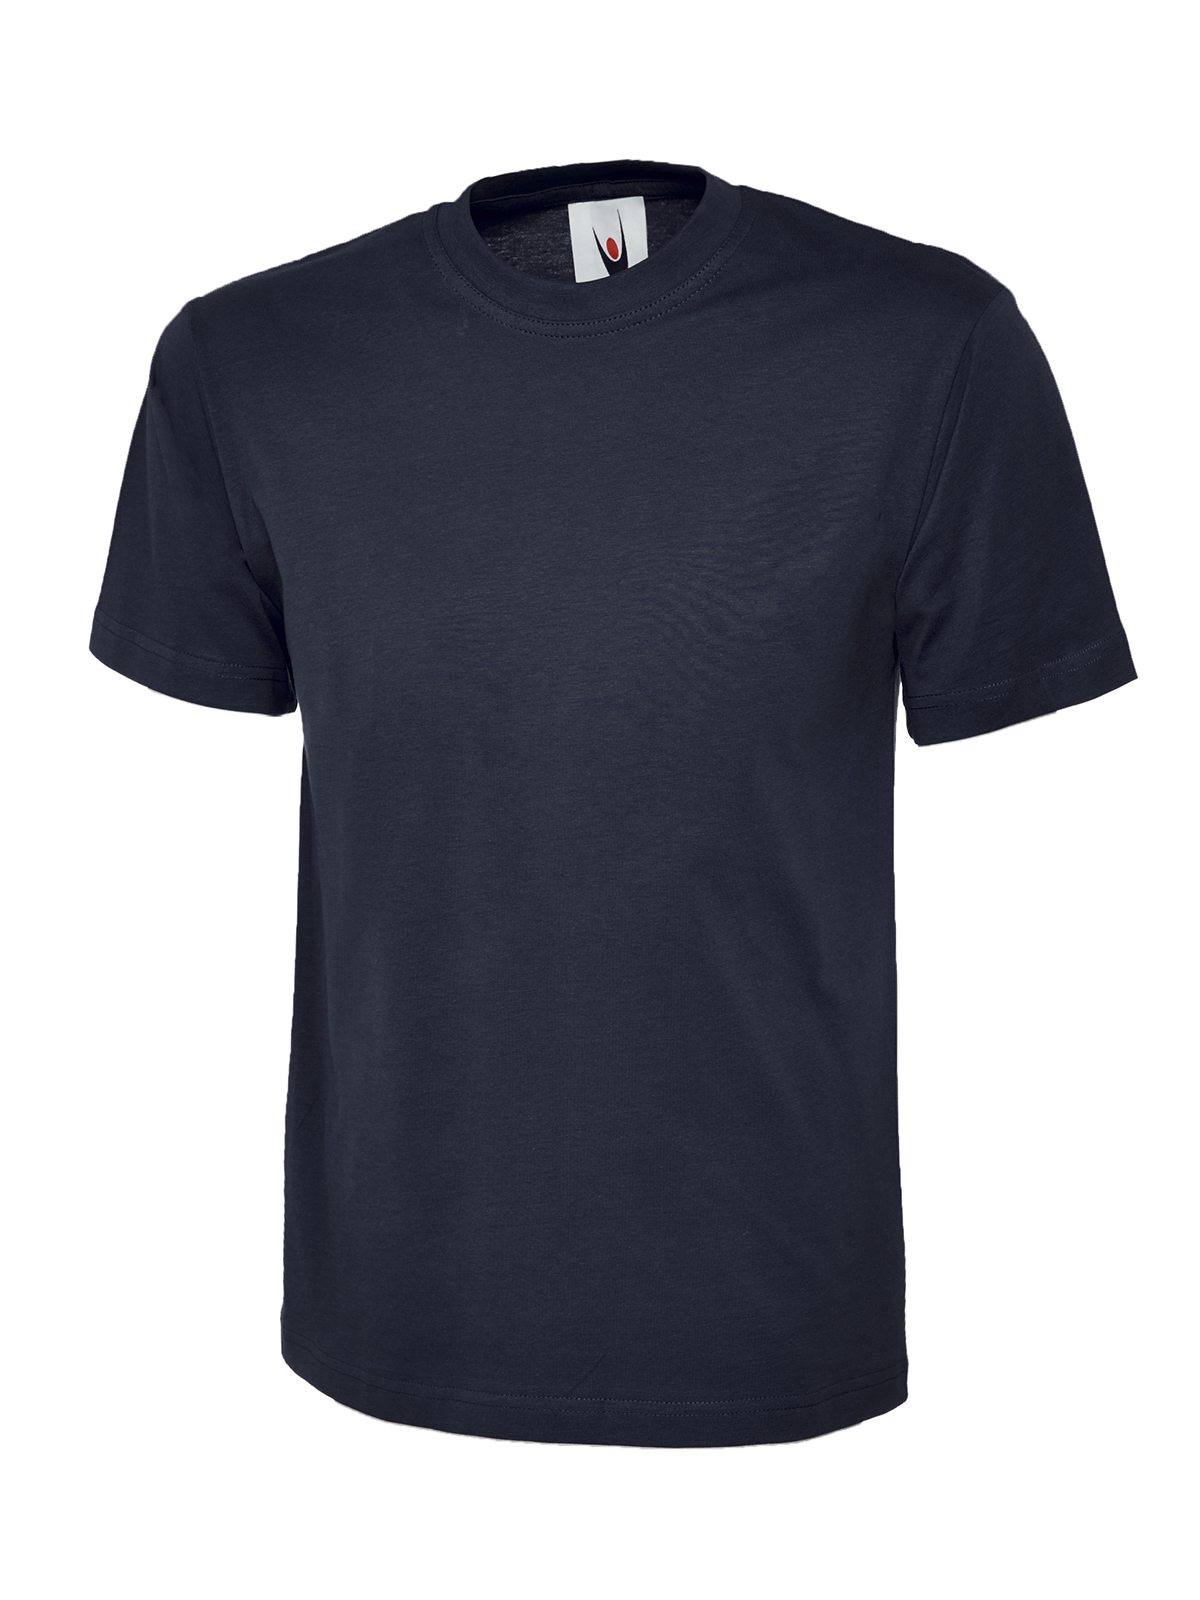 T-shirt, Navy - Size XL